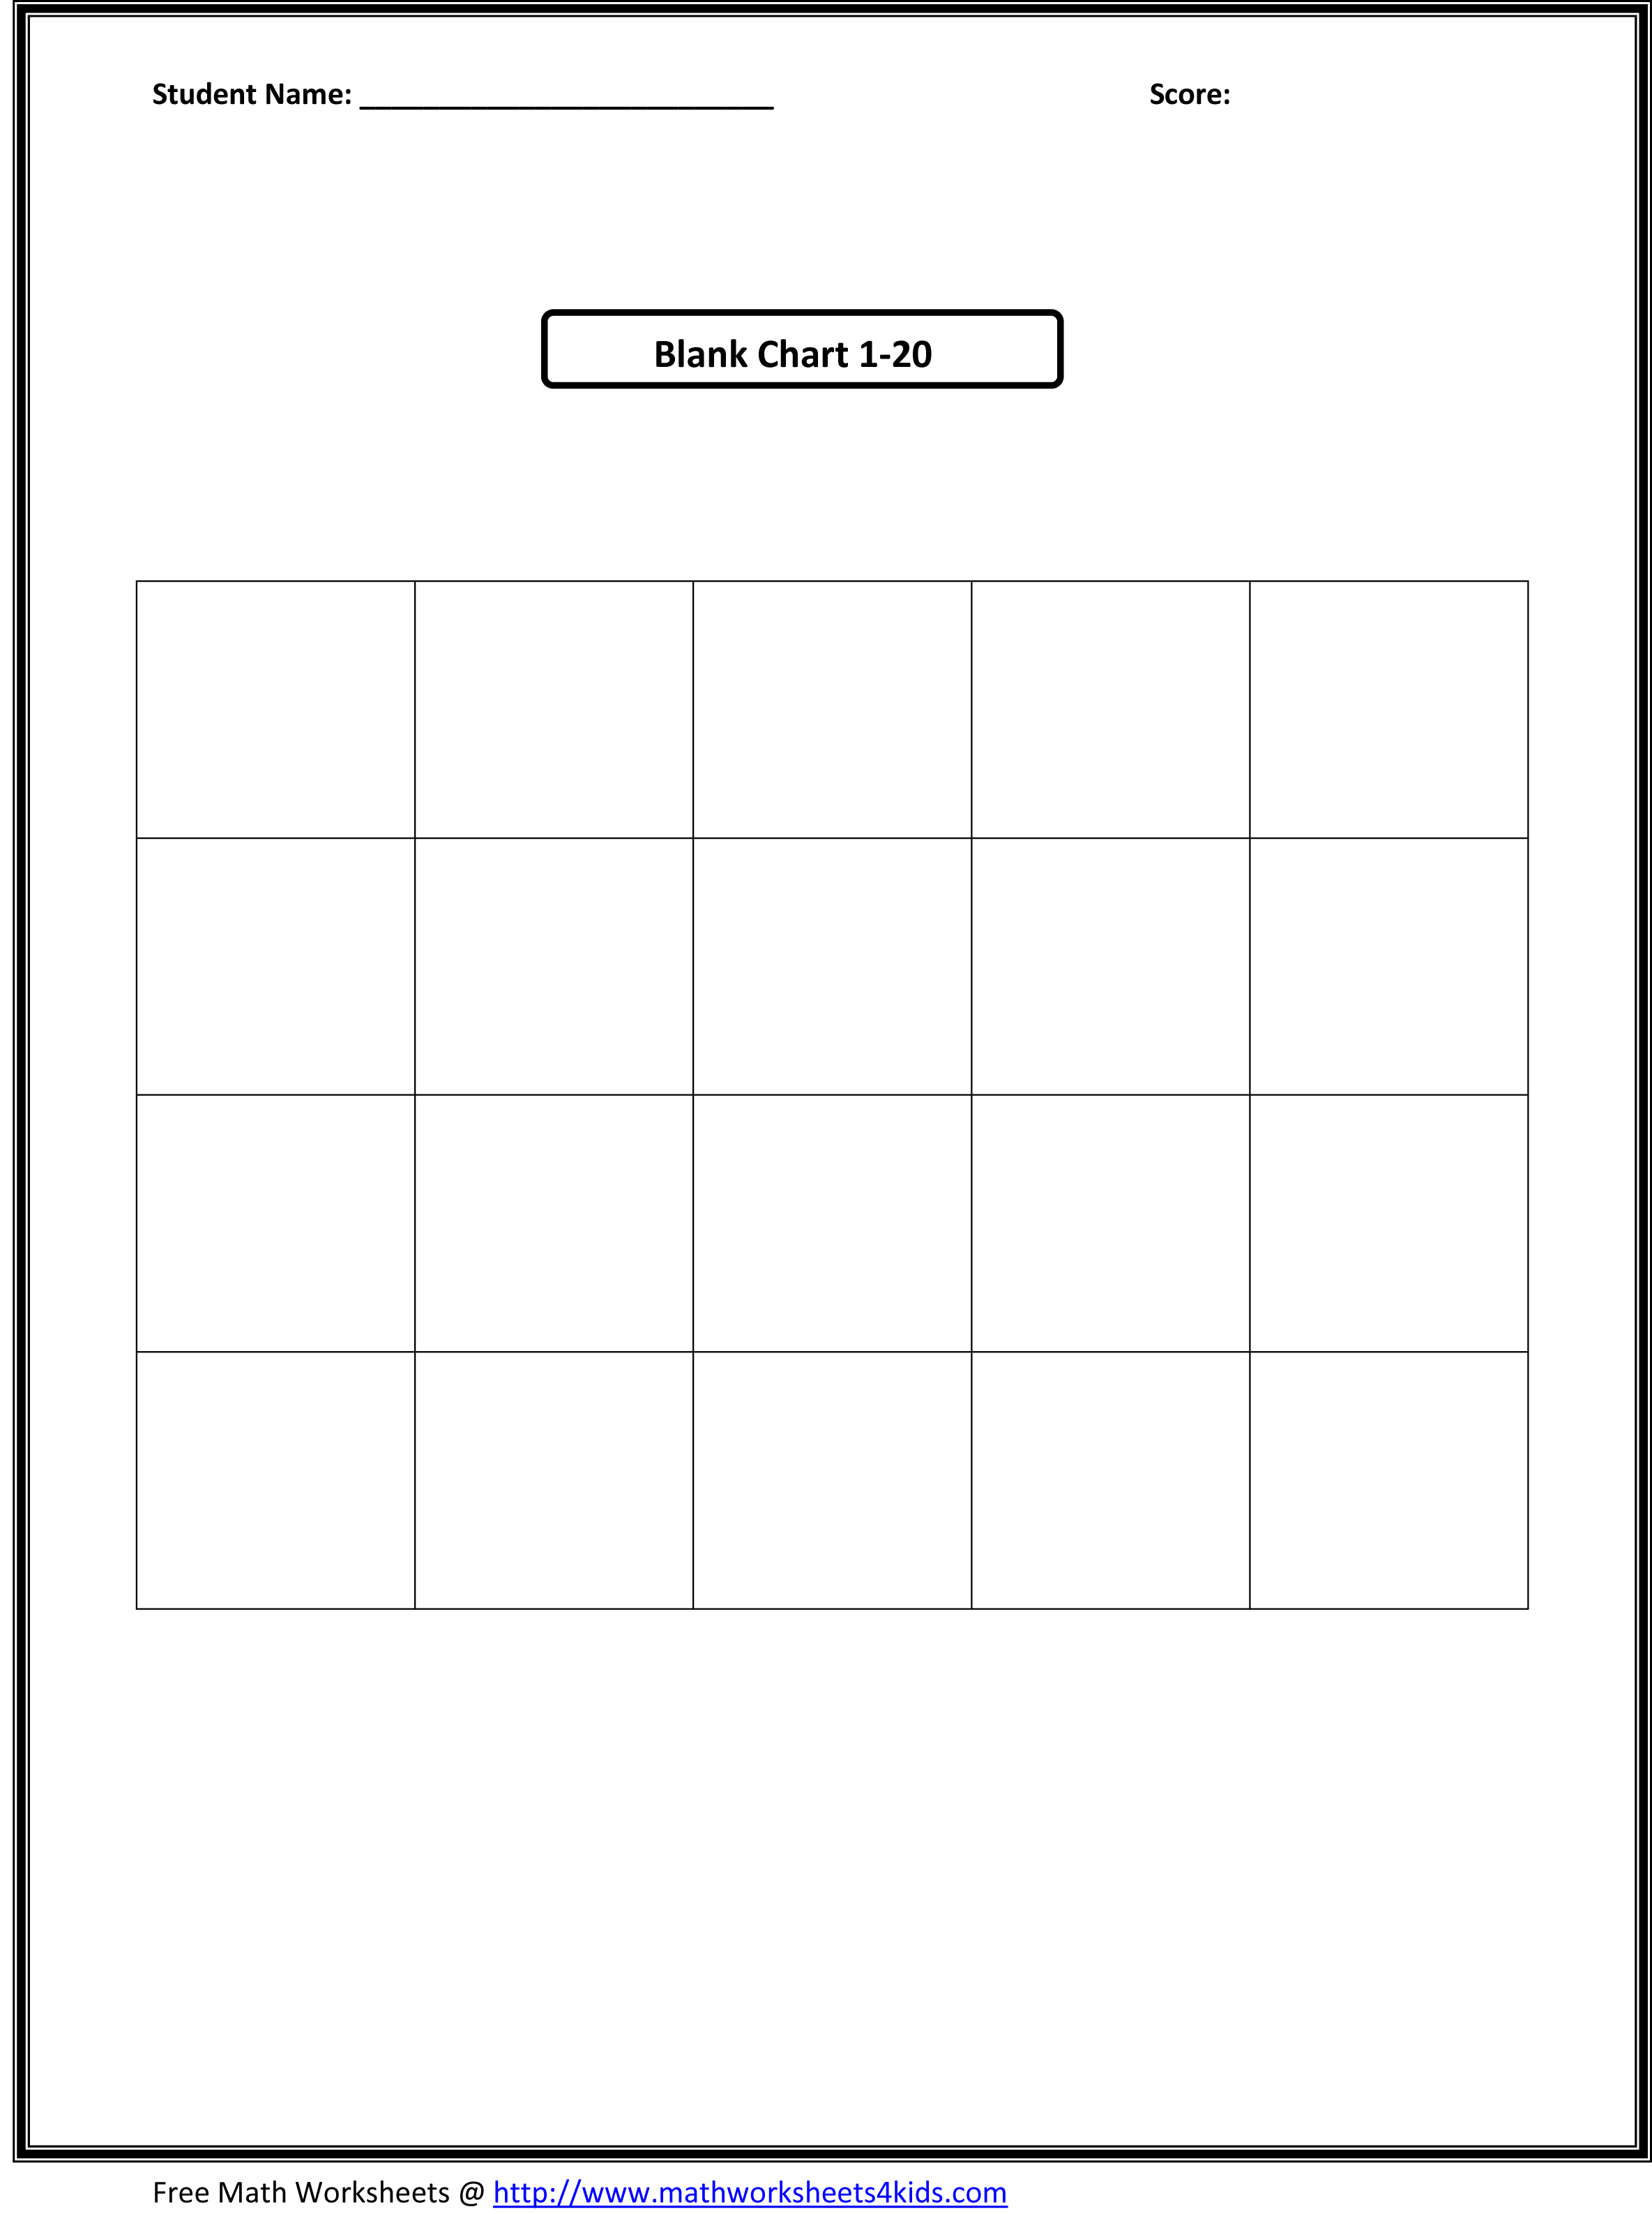 kindergarten-math-worksheets